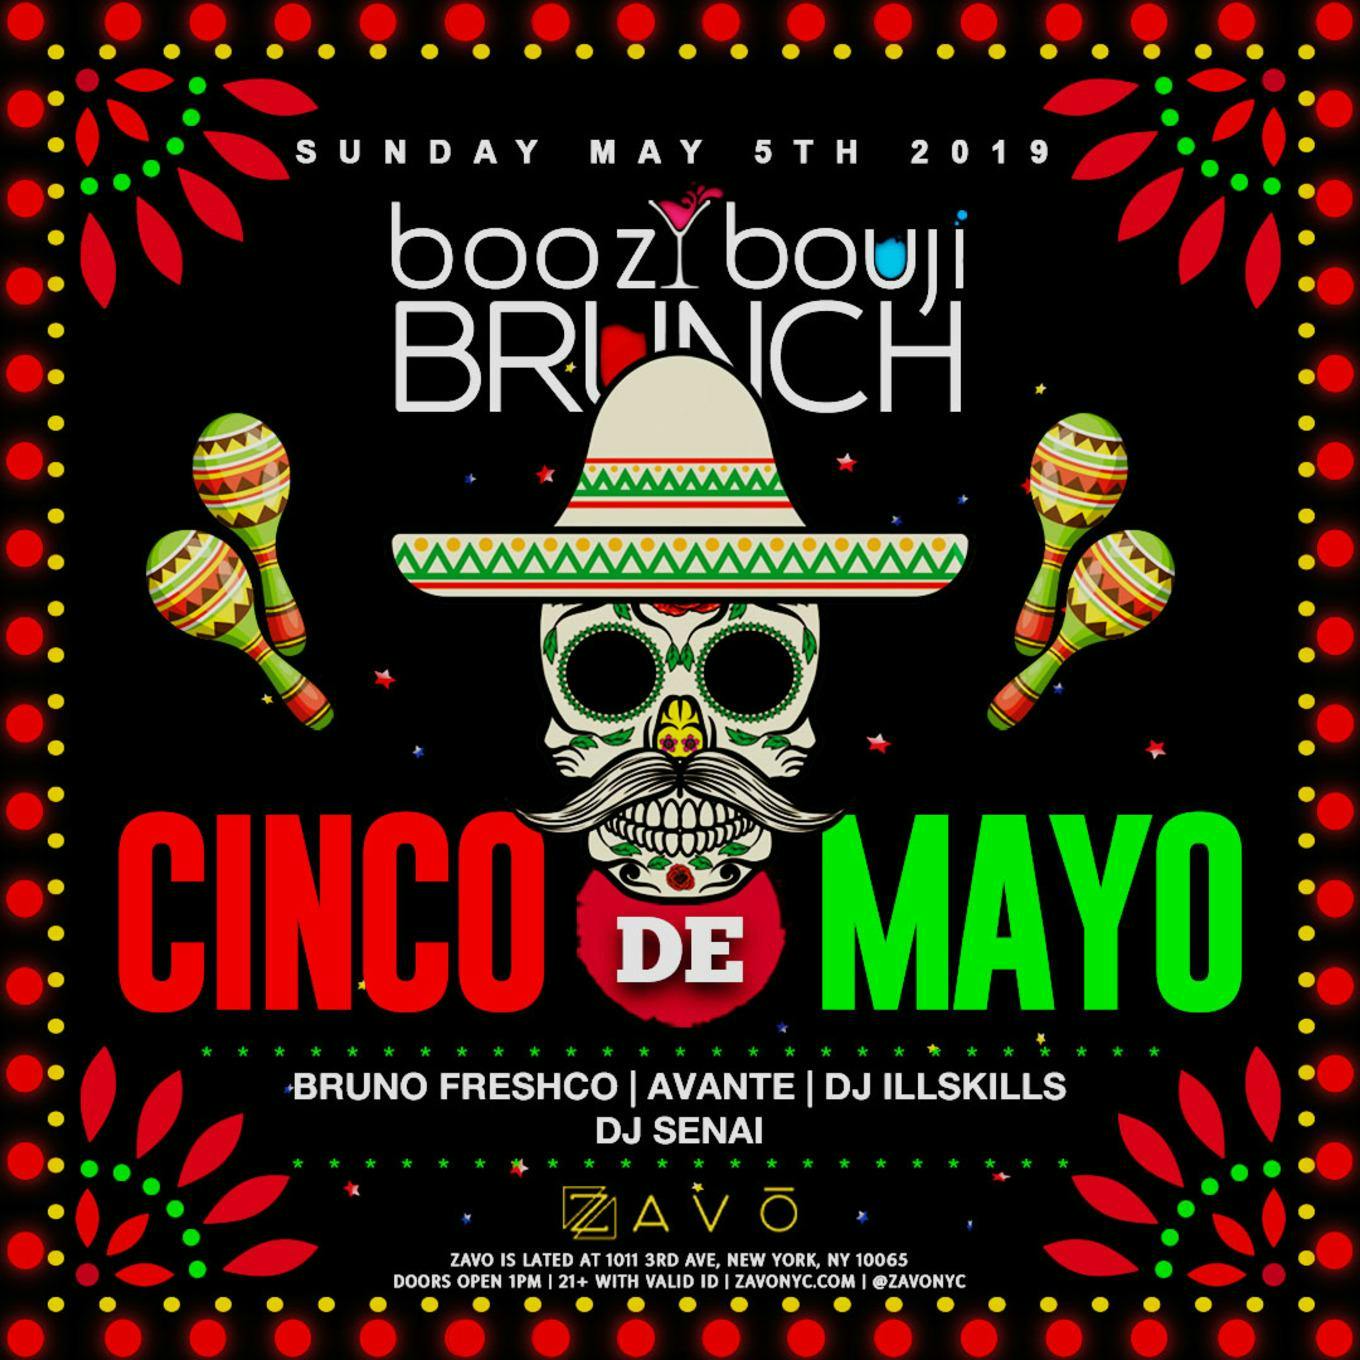 Boozy Bouji Brunch Cinco De Mayo at Zavo